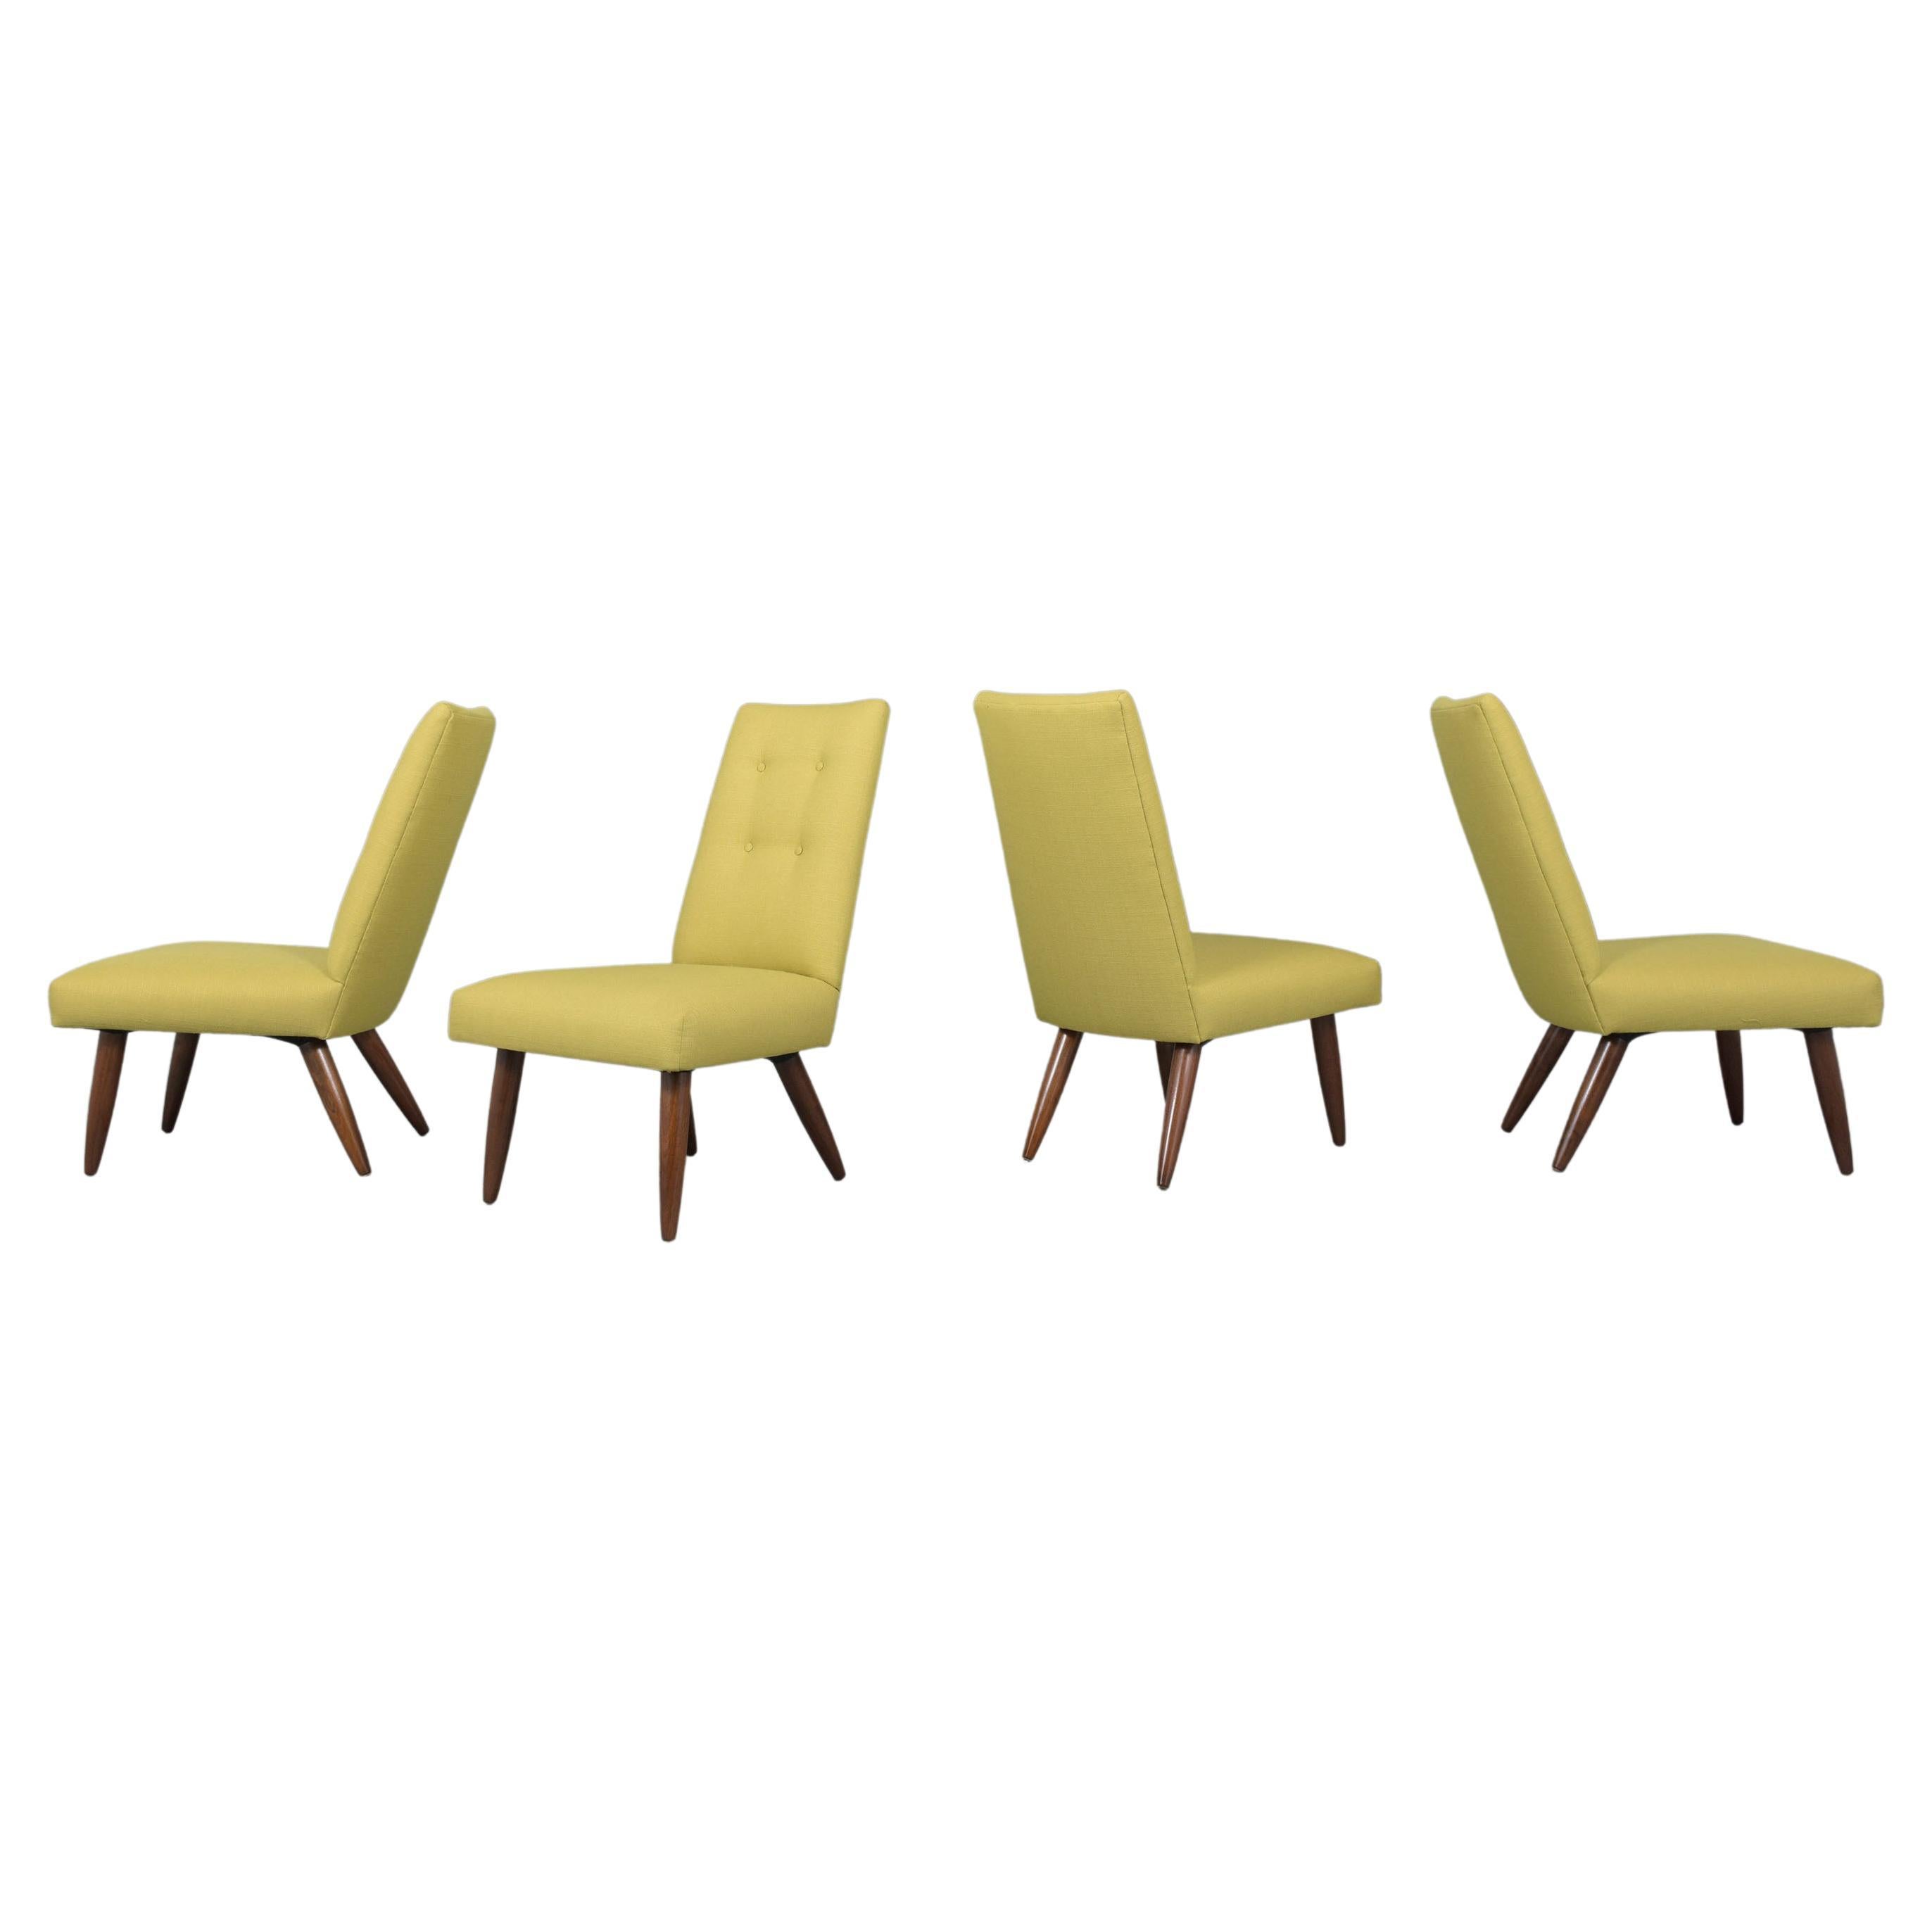 Juego de cuatro sillas de comedor tapizadas danesas modernas